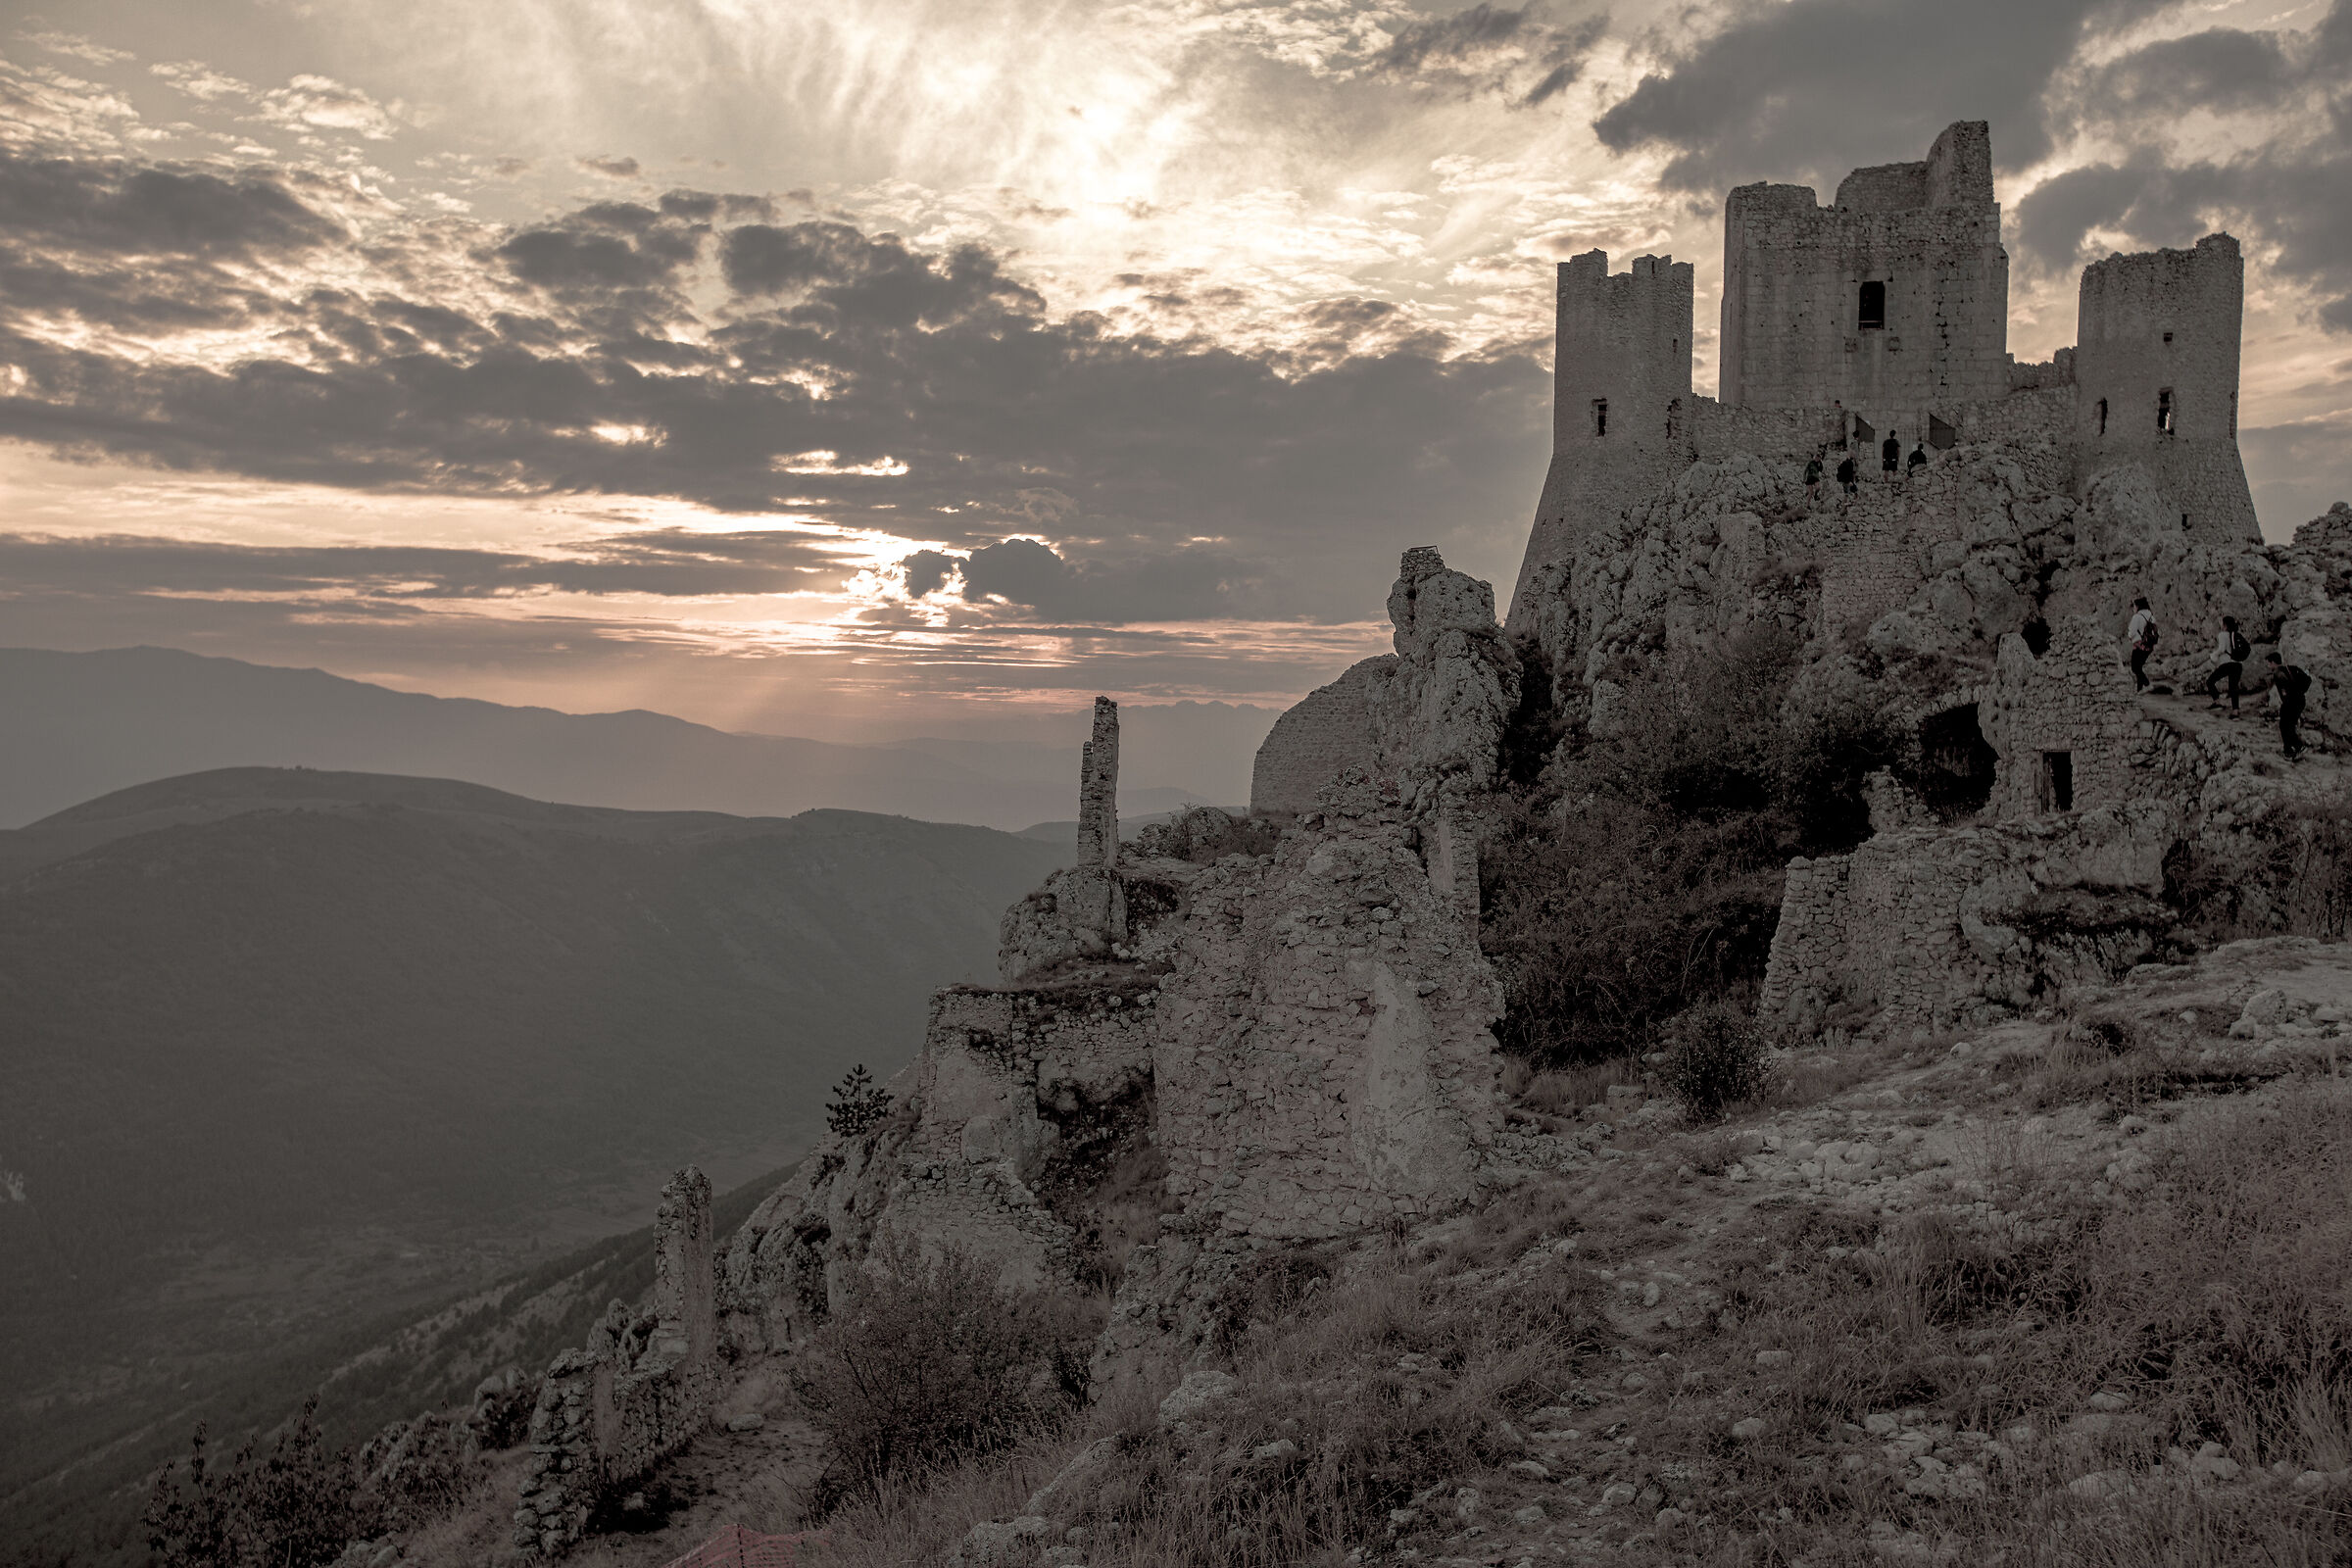 Calascio Fortress...